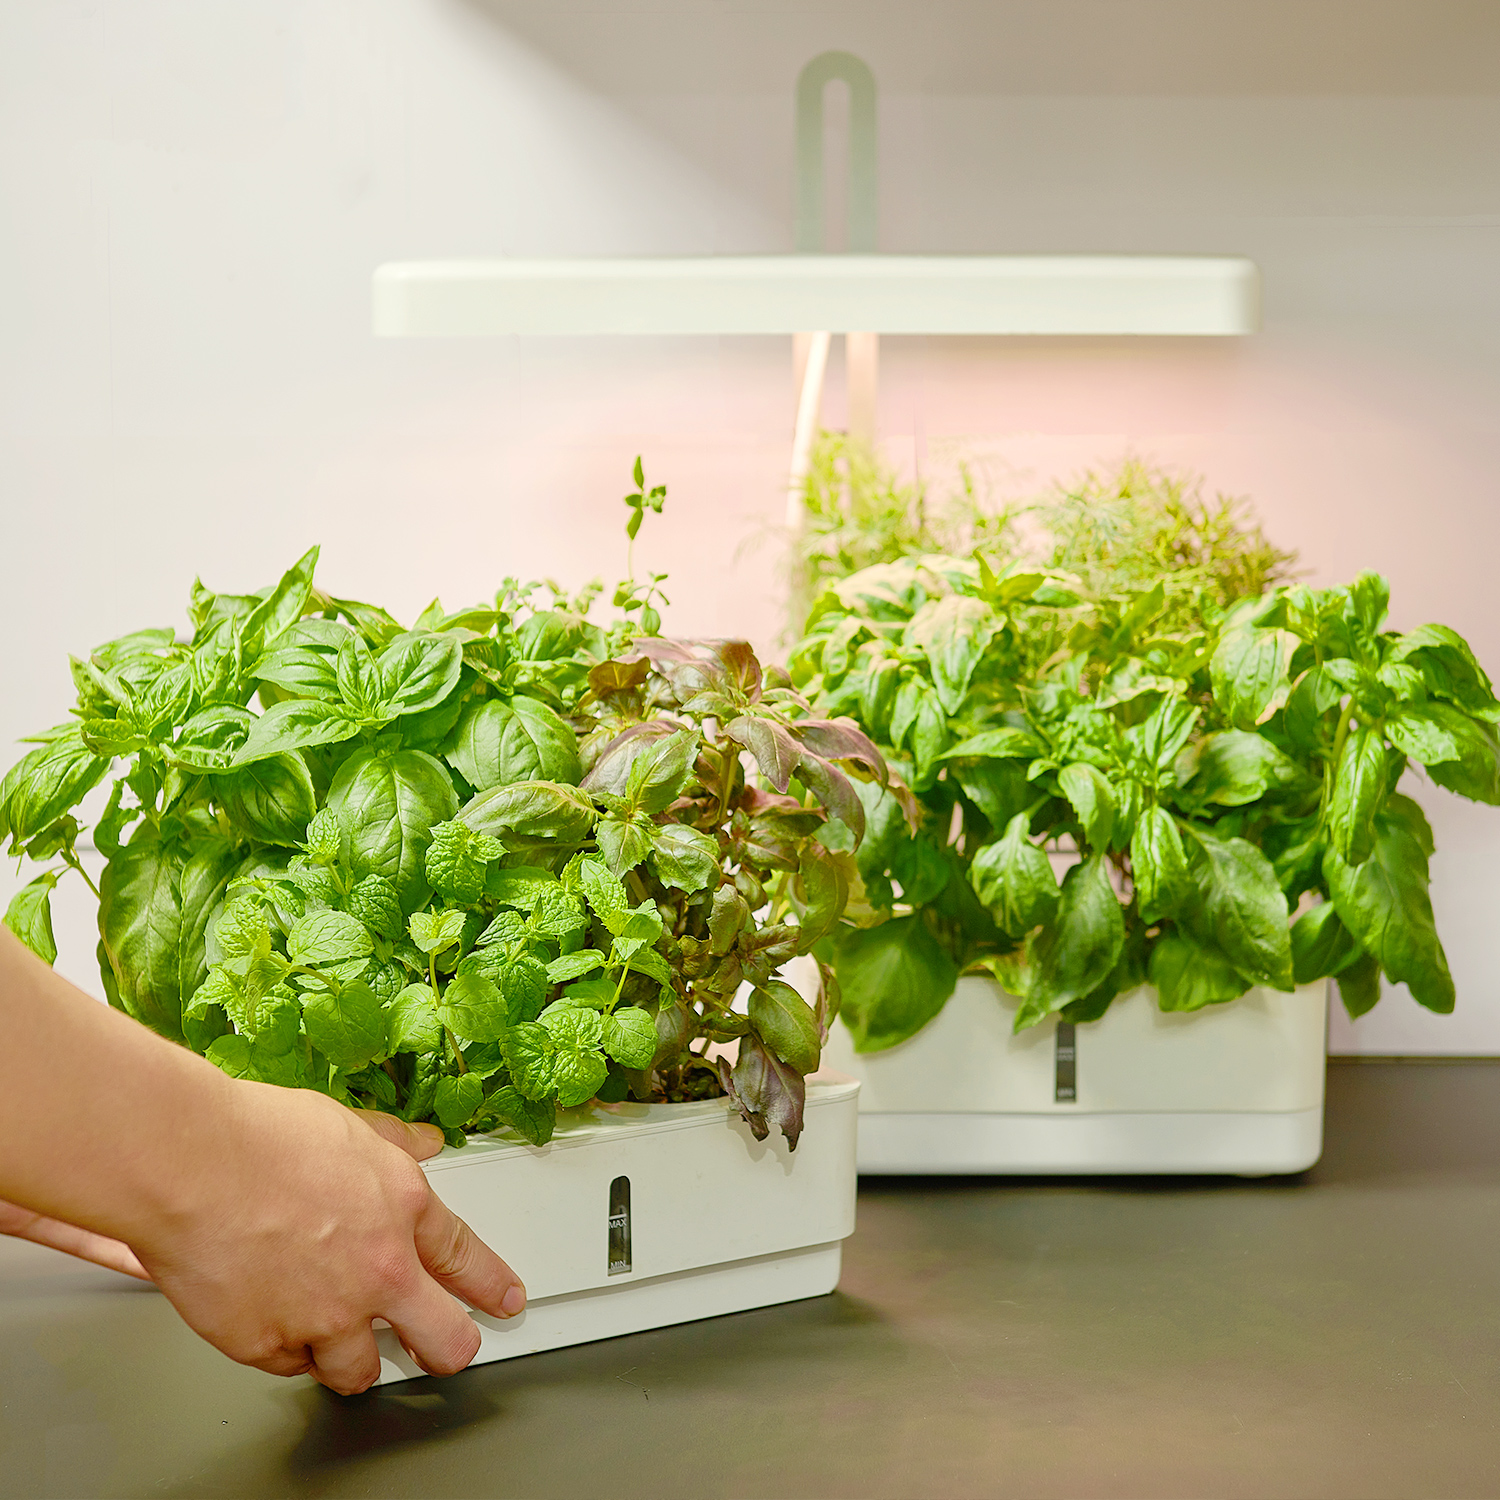 SPH001 Lucerne mini garden indoor hydroponics box 4 pods system herb garden pots